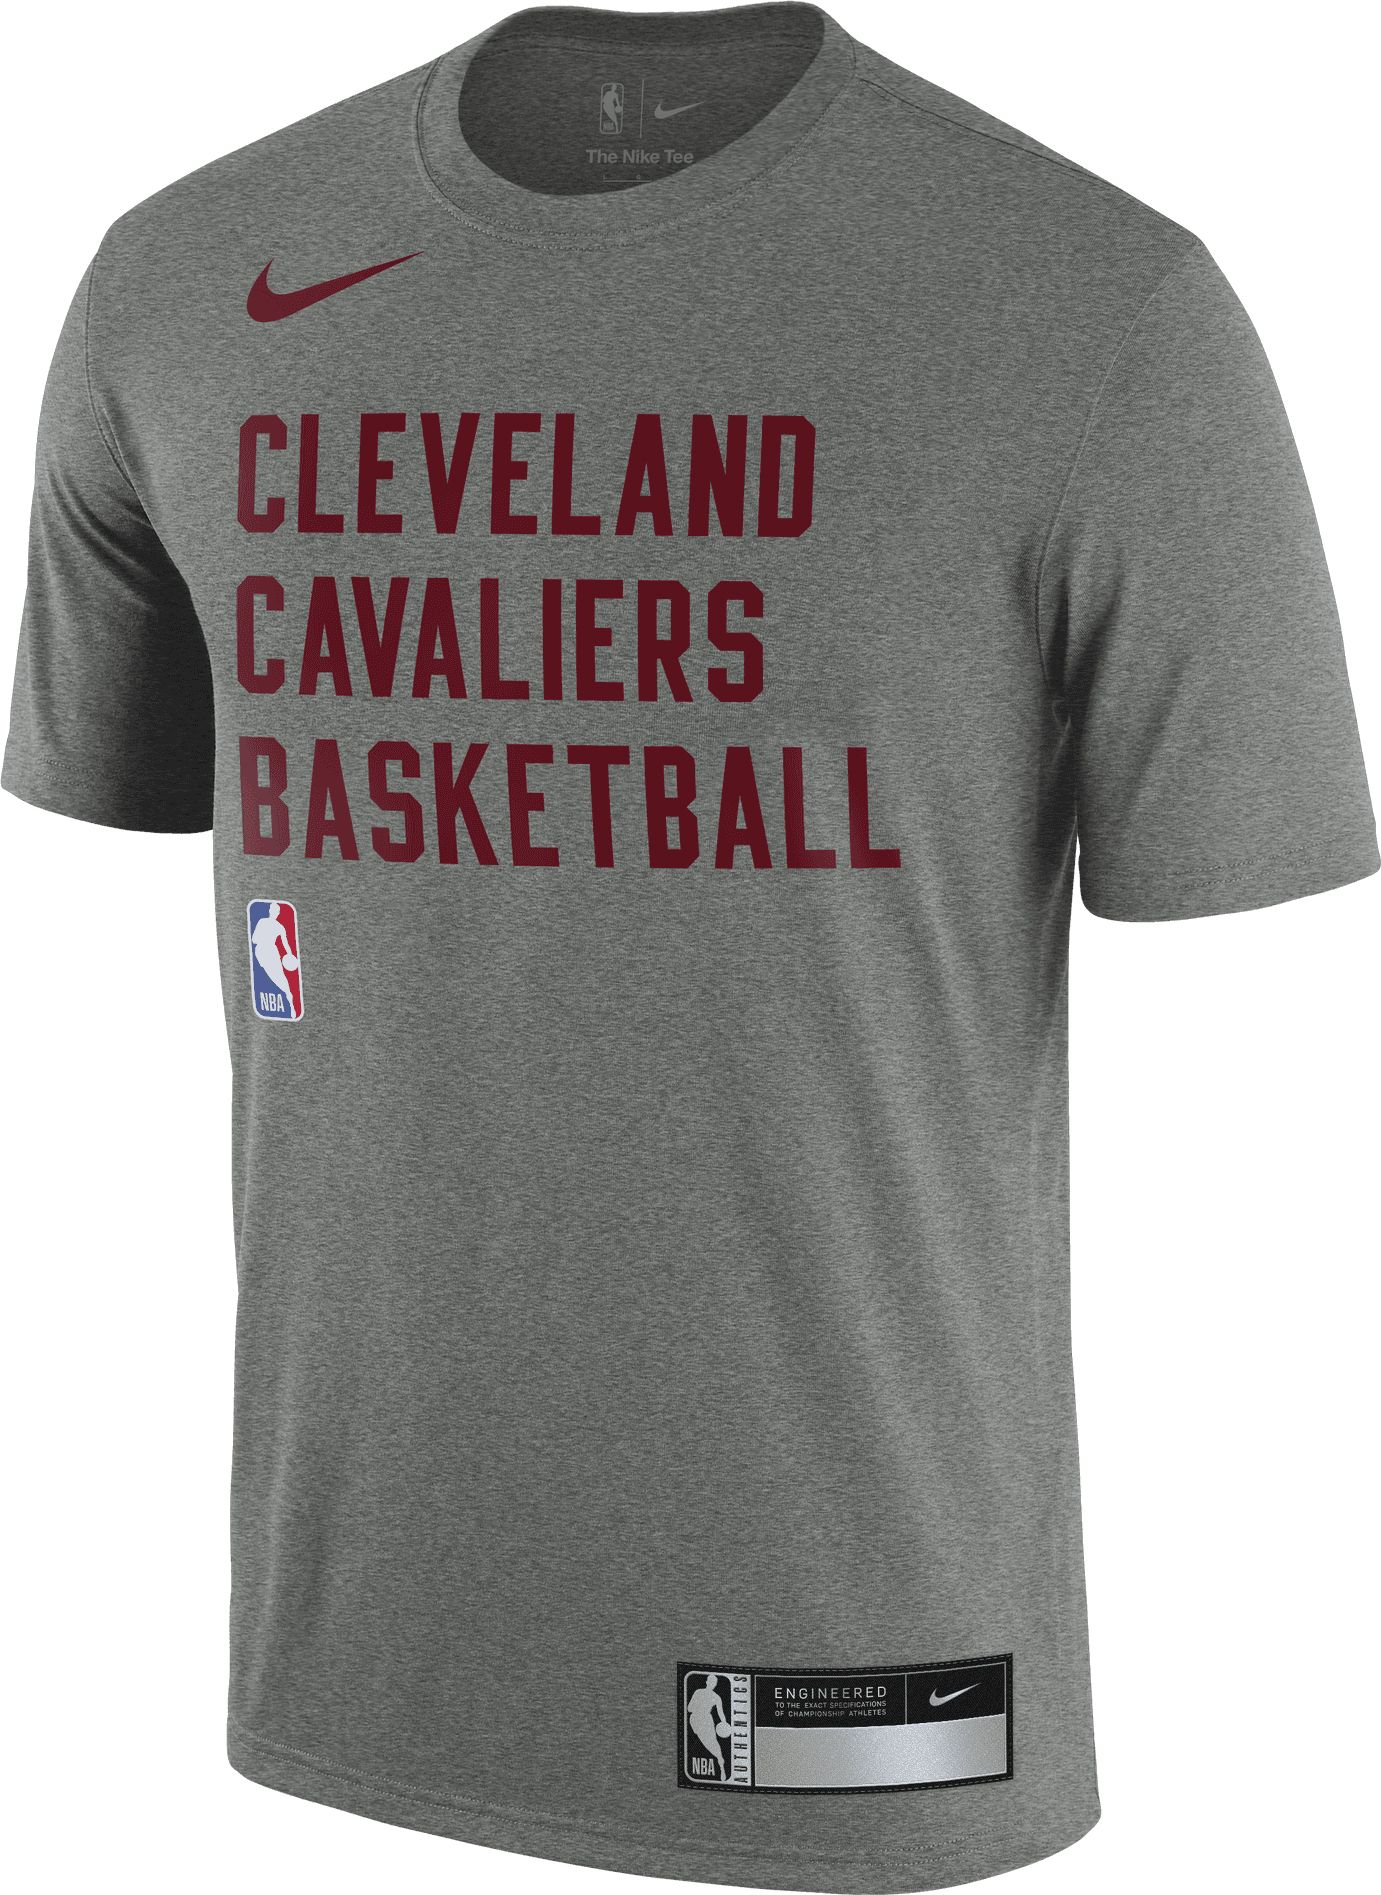 Nike Men's Cleveland Cavaliers Grey Practice T-Shirt, XXL, Gray